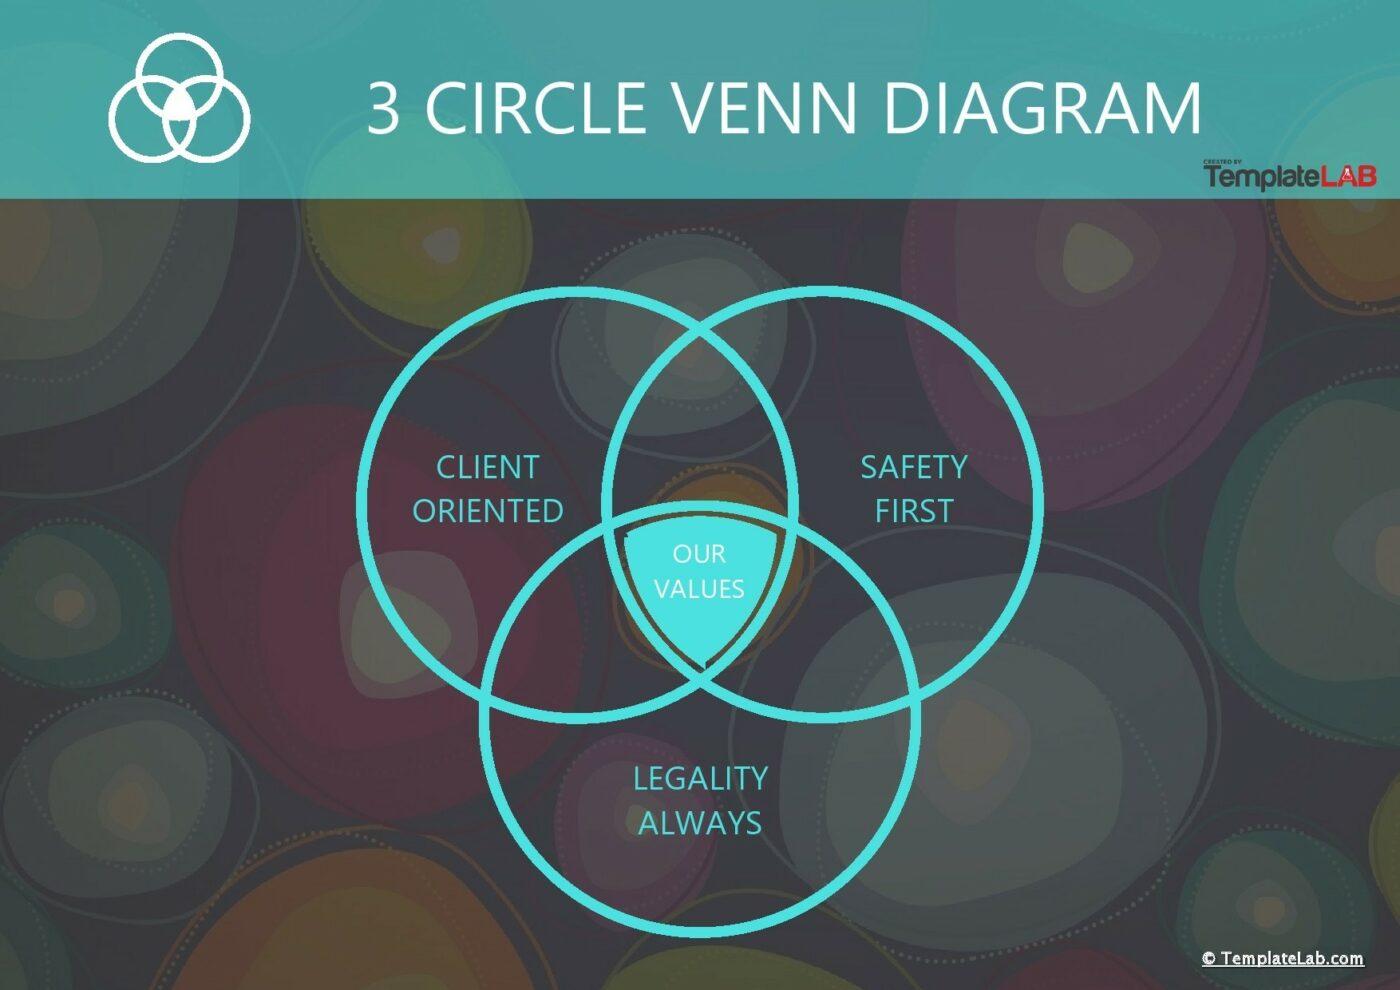 Microsoft Word 3 Circle Venn Diagram Template by TemplateLab